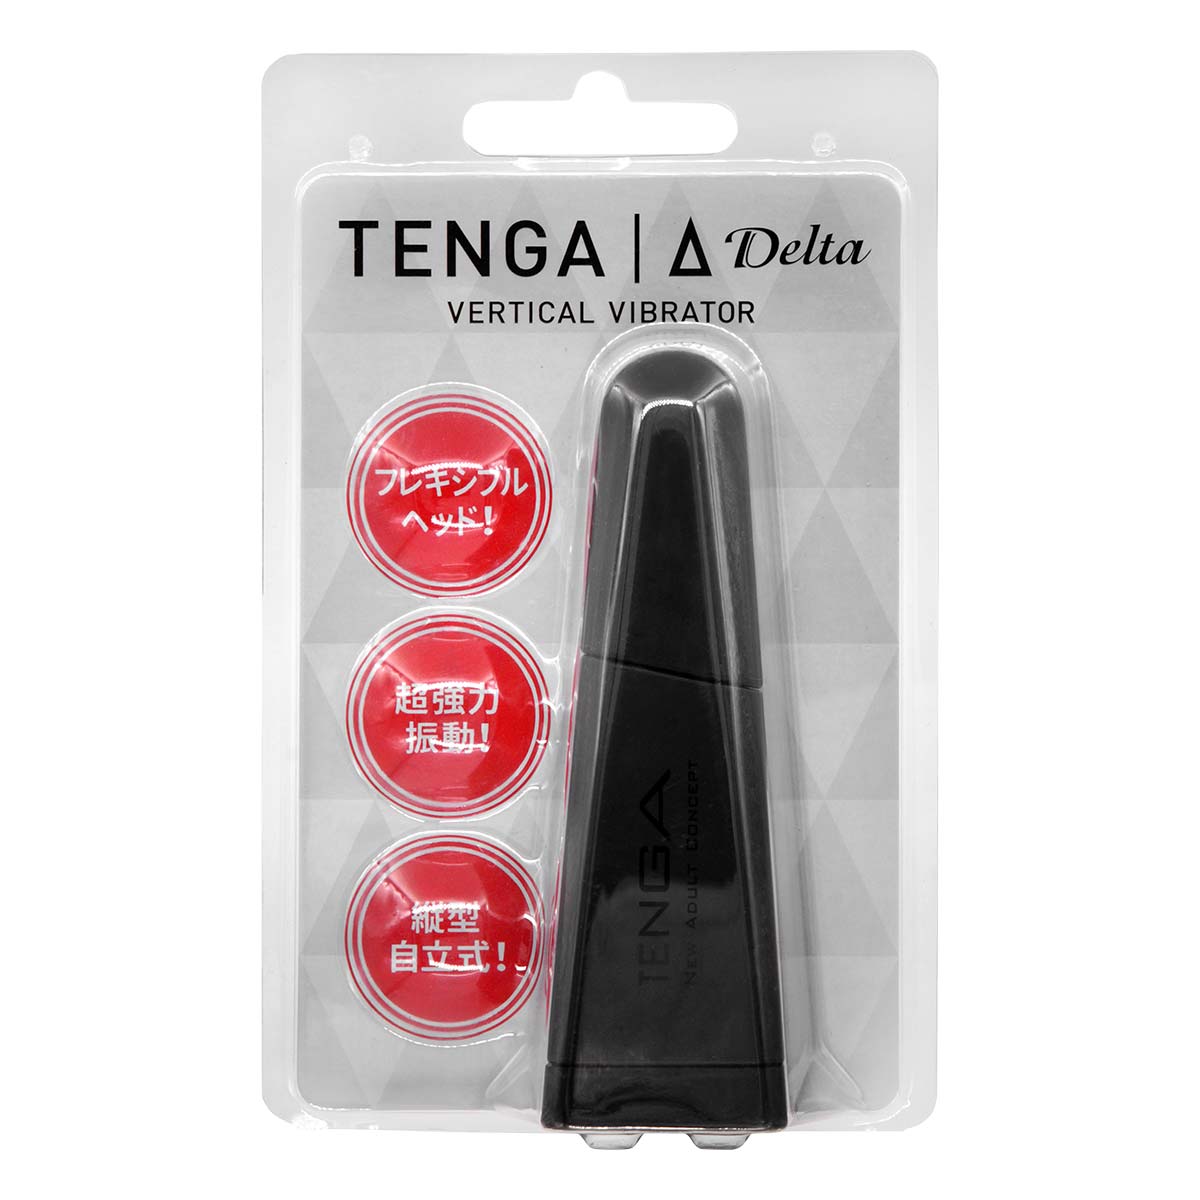 TENGA Δ Delta-thumb_2